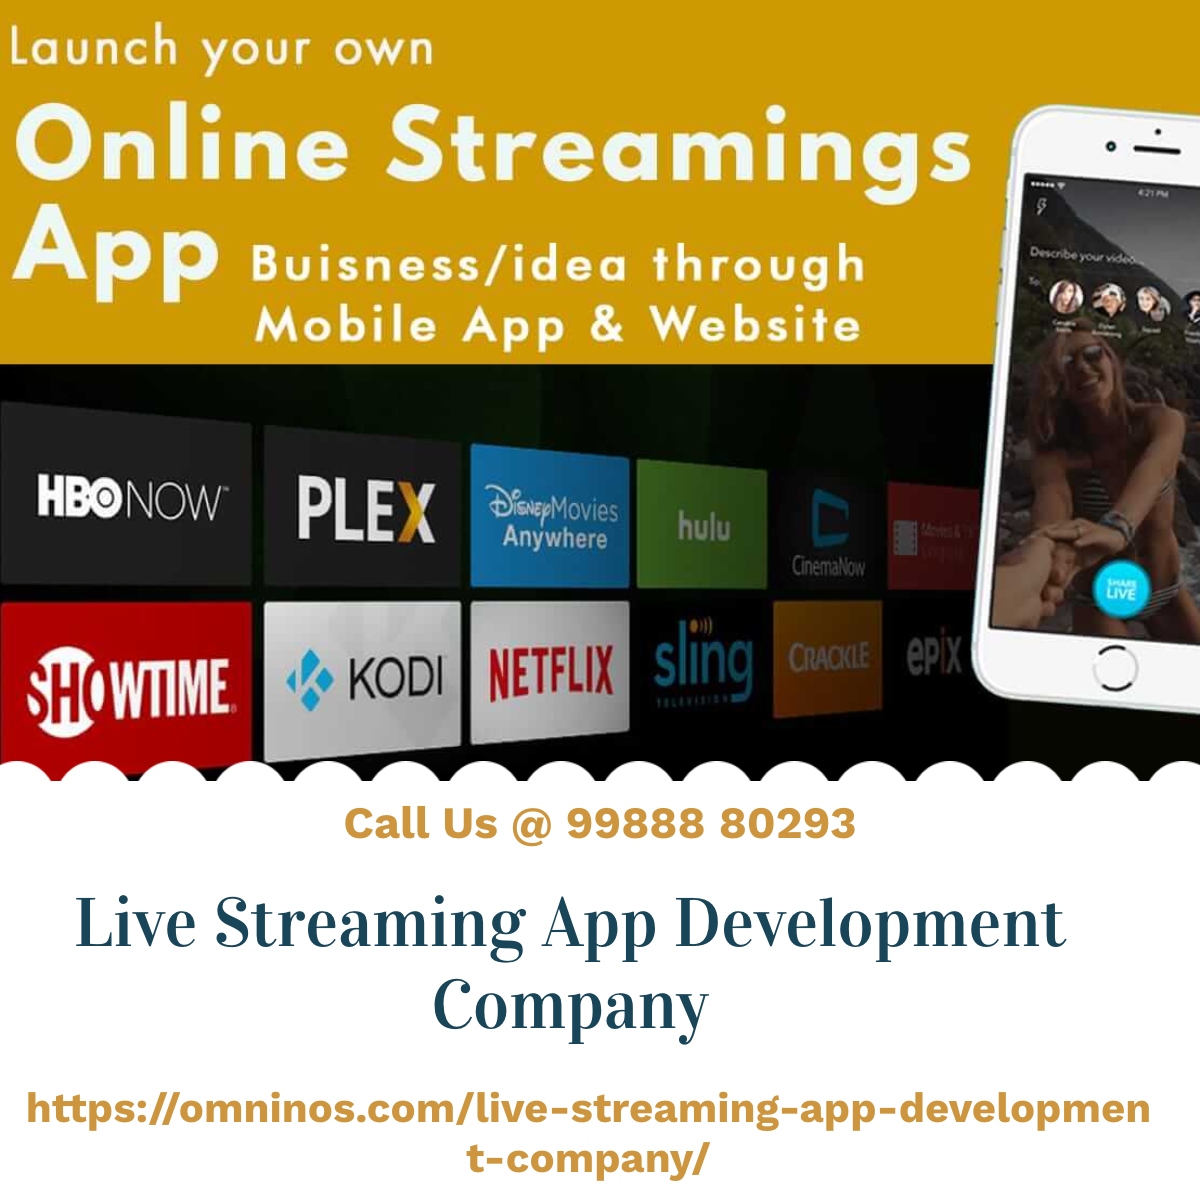 Omninos Solutions - Live Streaming App Development Company.jpg  by amritkaur